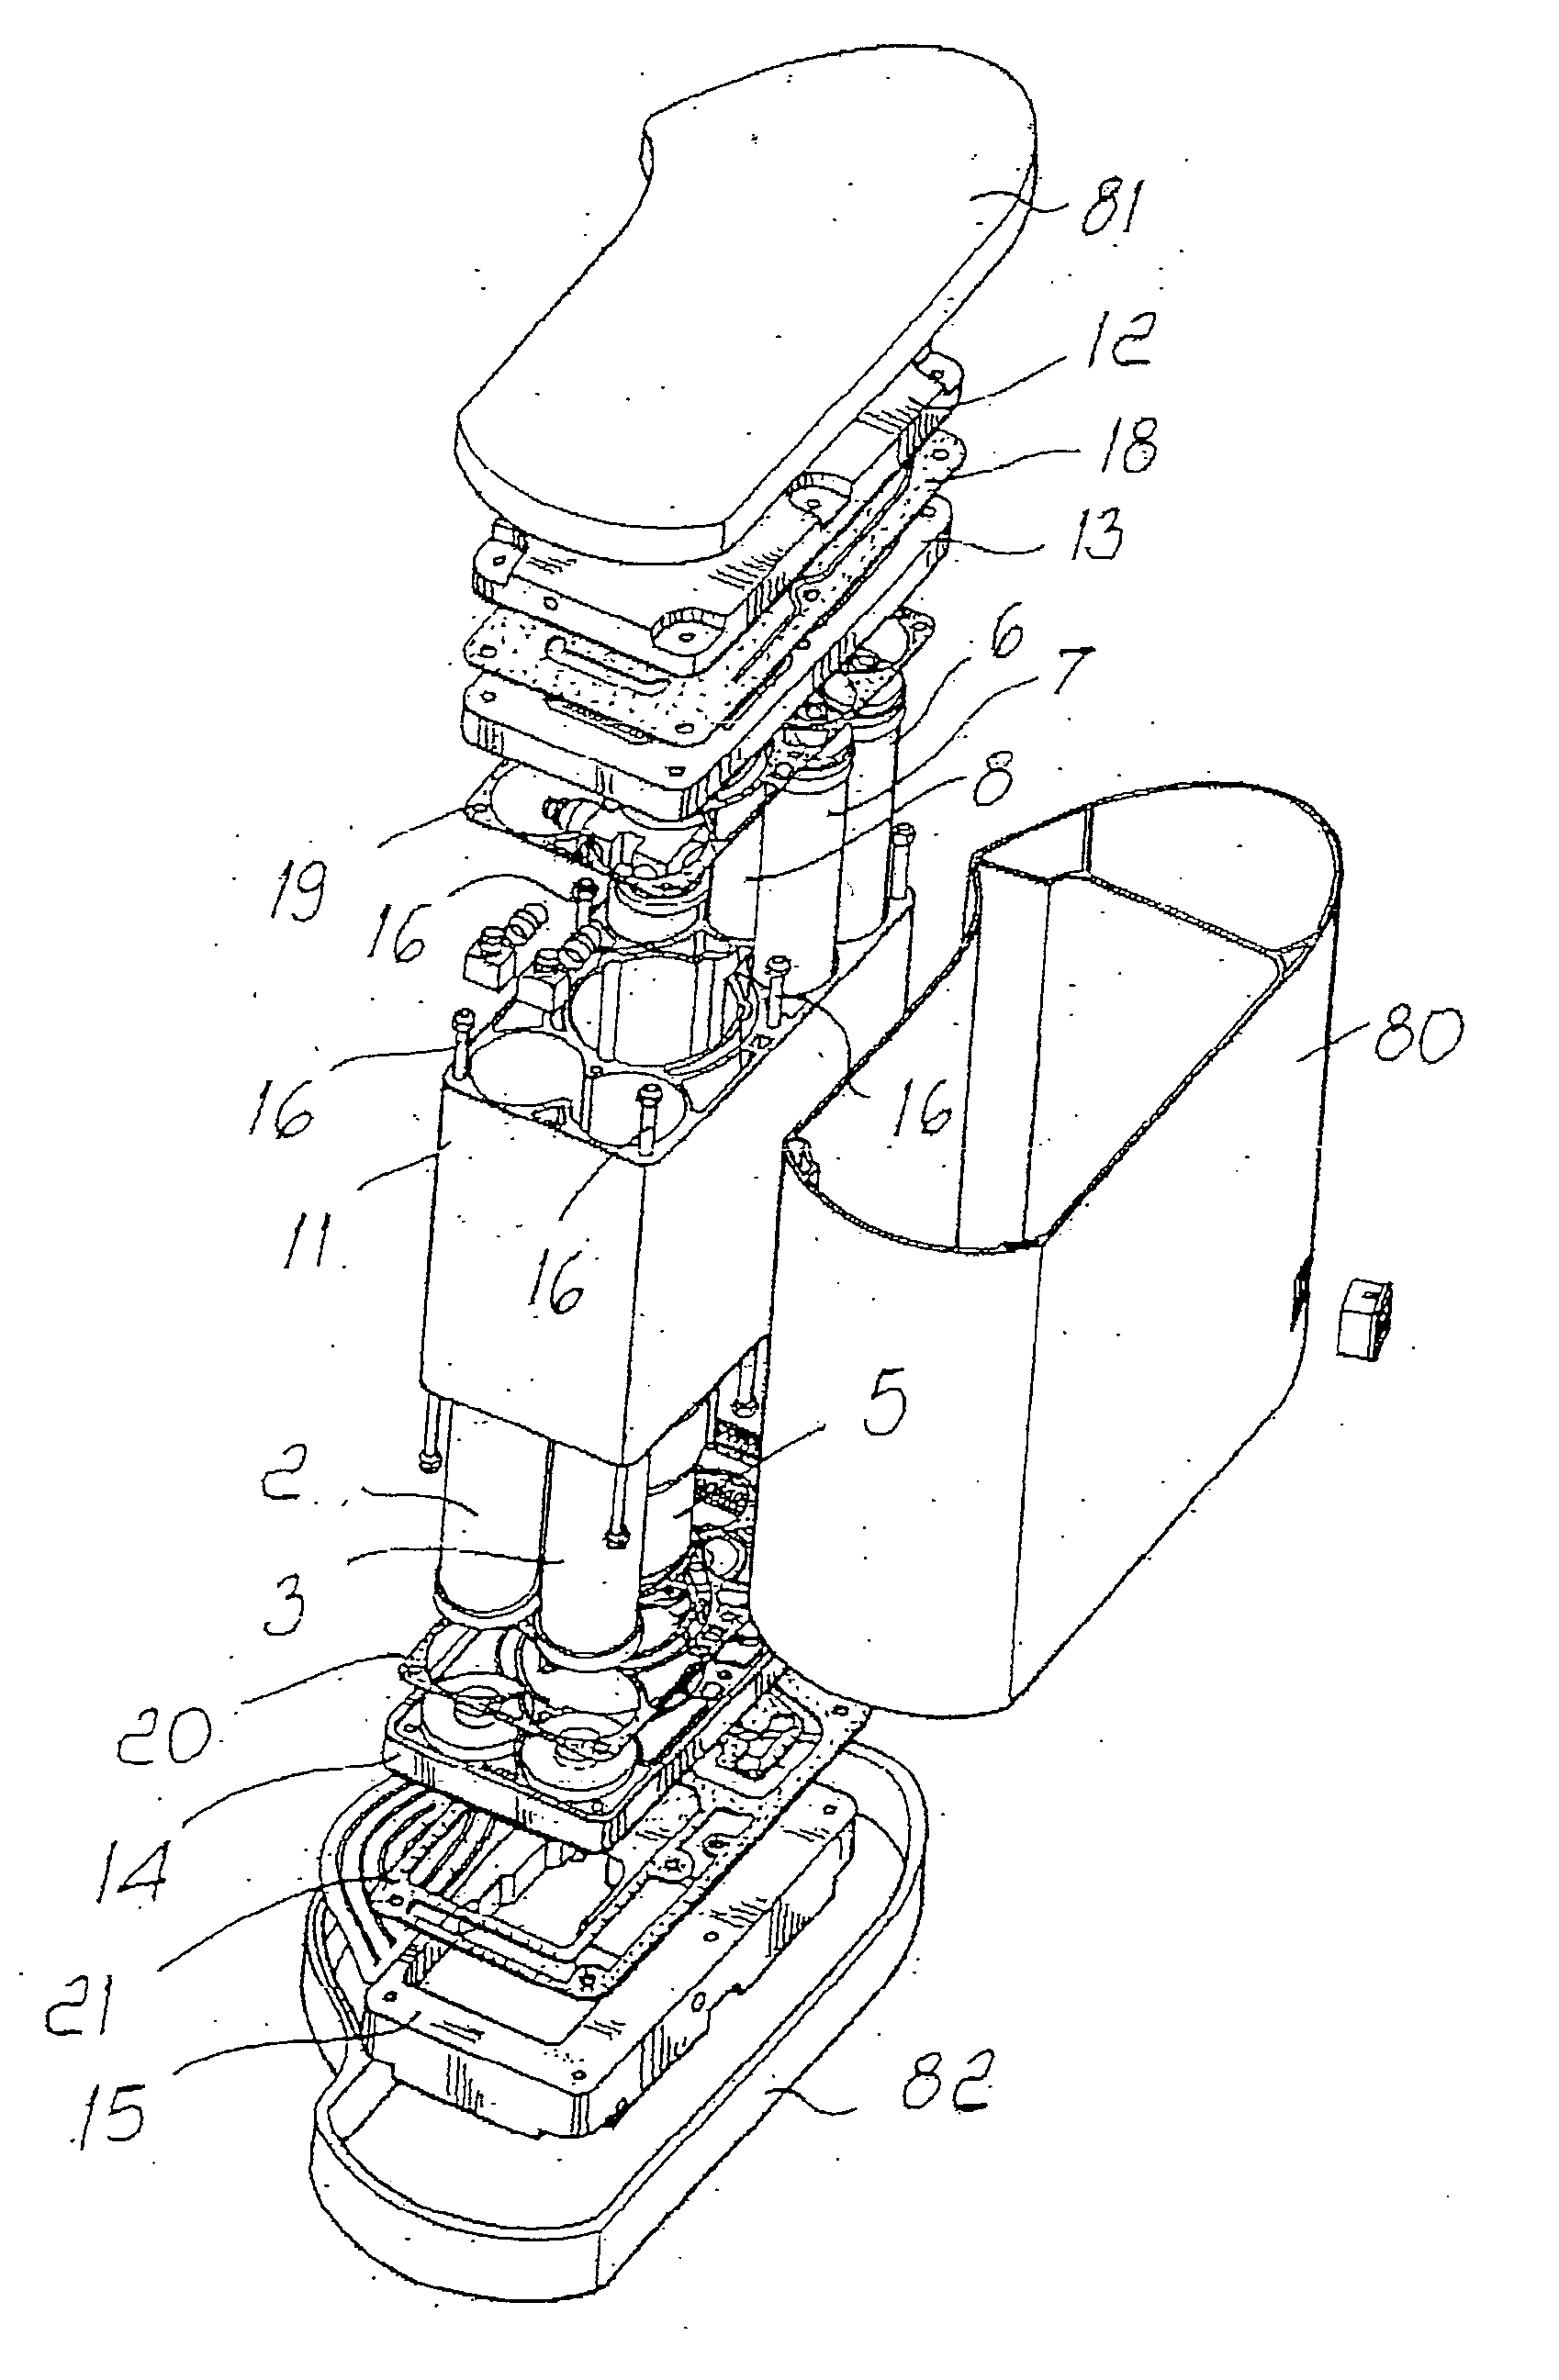 Water treatment apparatus